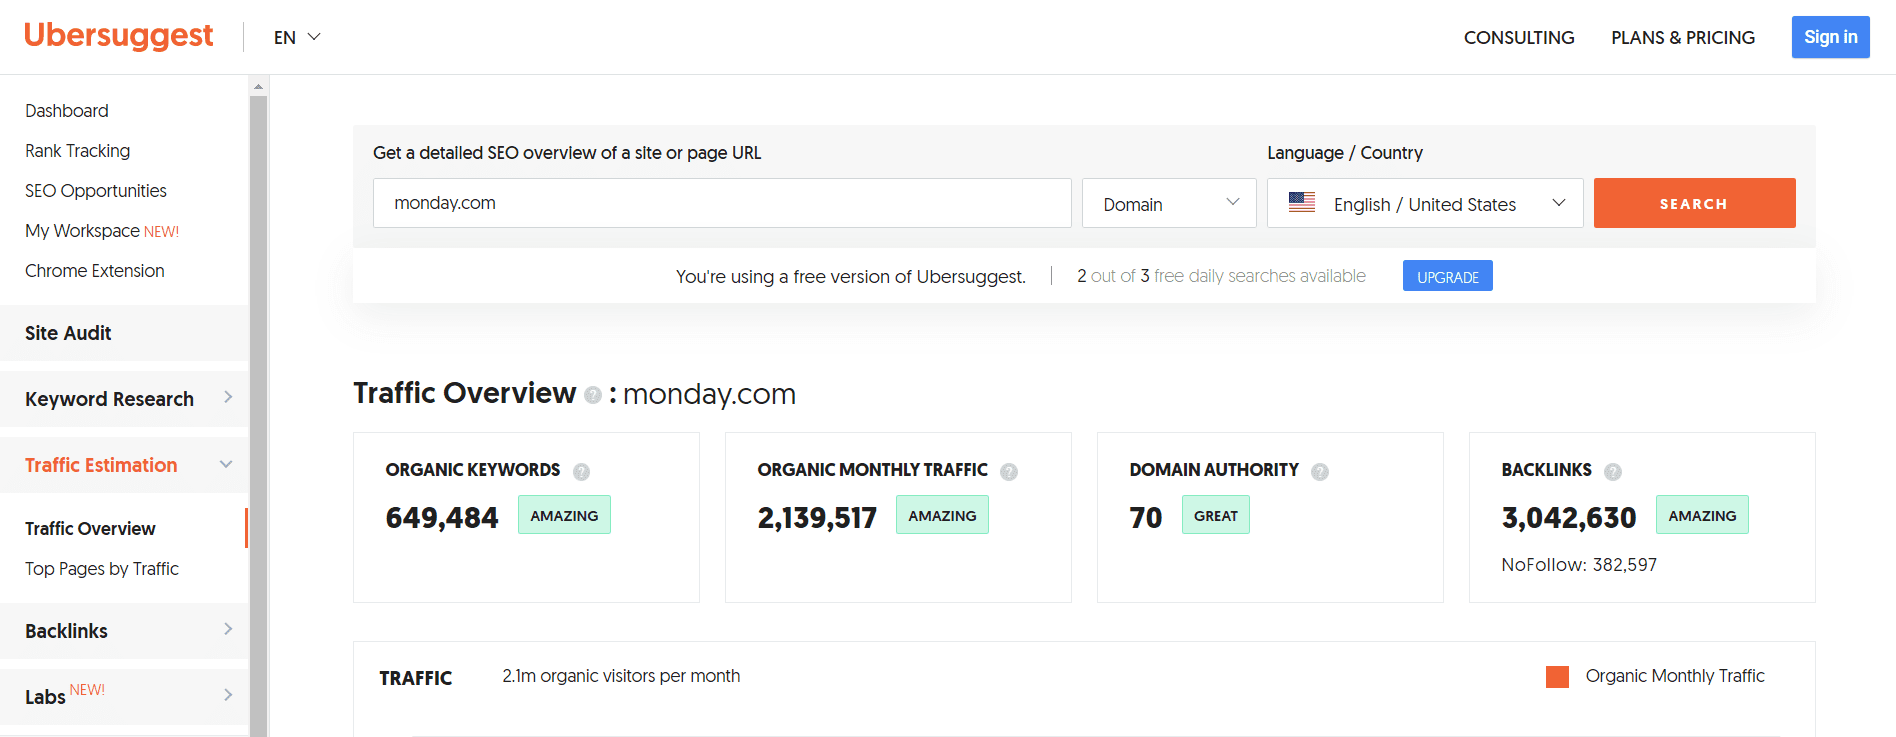 Monday.com content marketing strategy - website authority